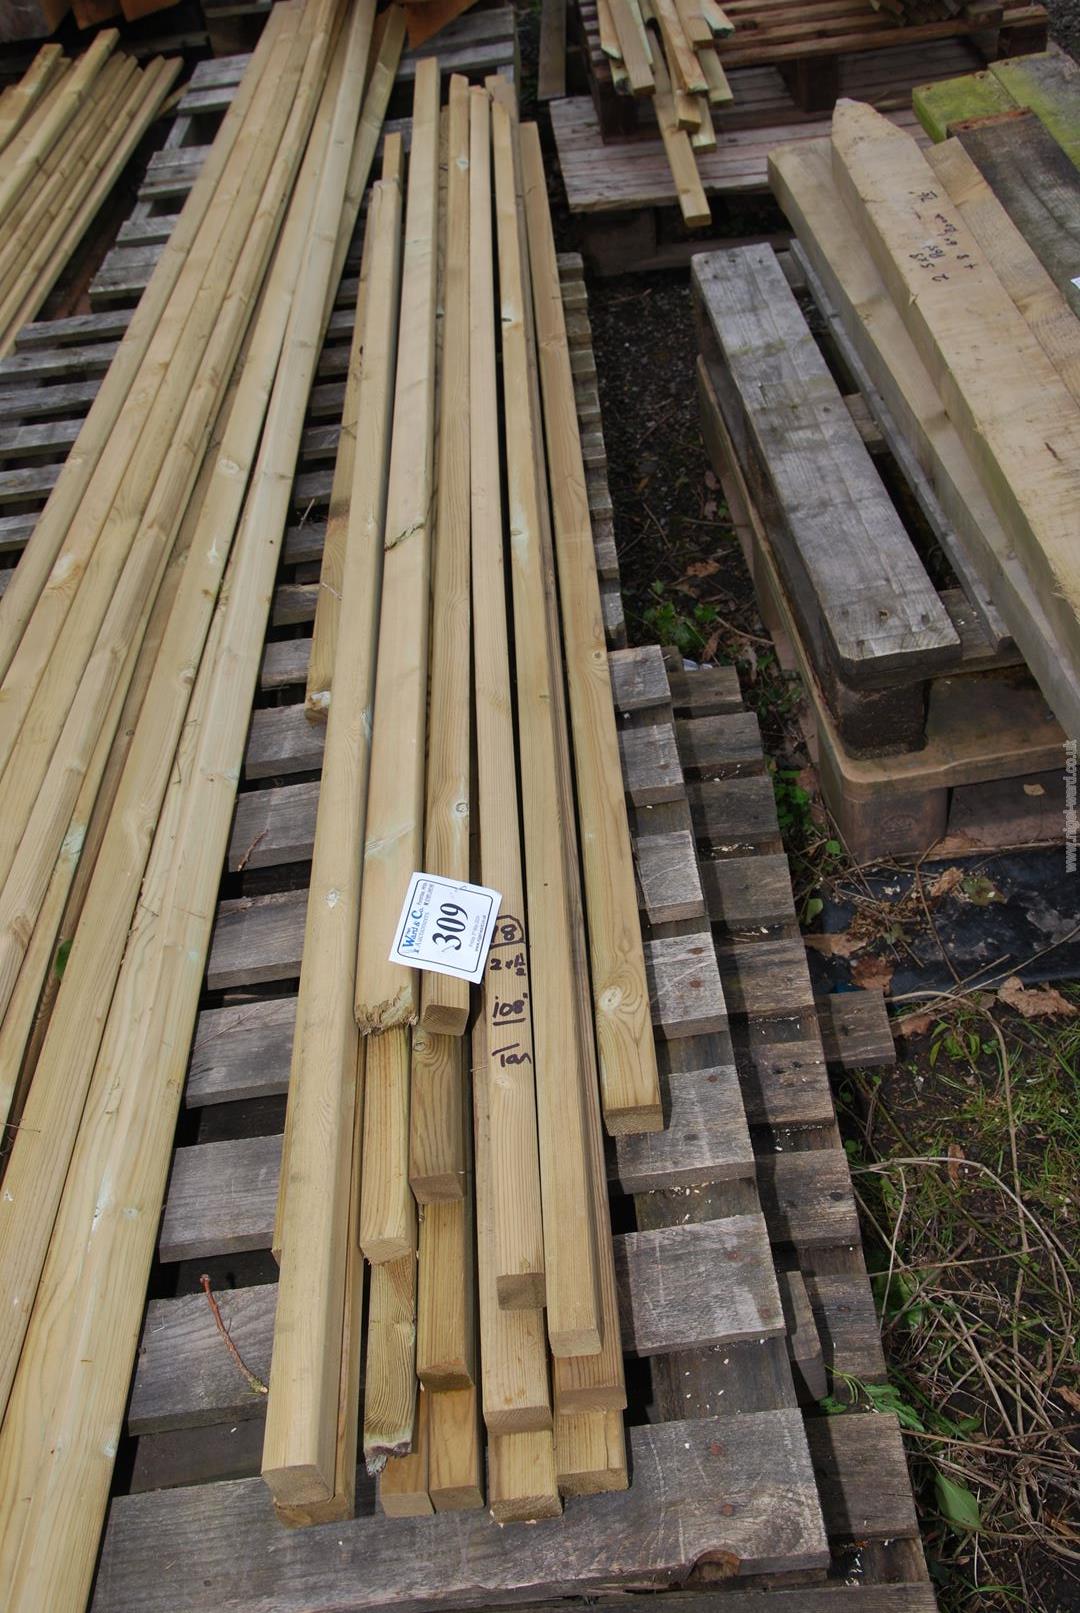 18 lengths of tantalised softwood 2" x 1 1/2" average length 108" long.